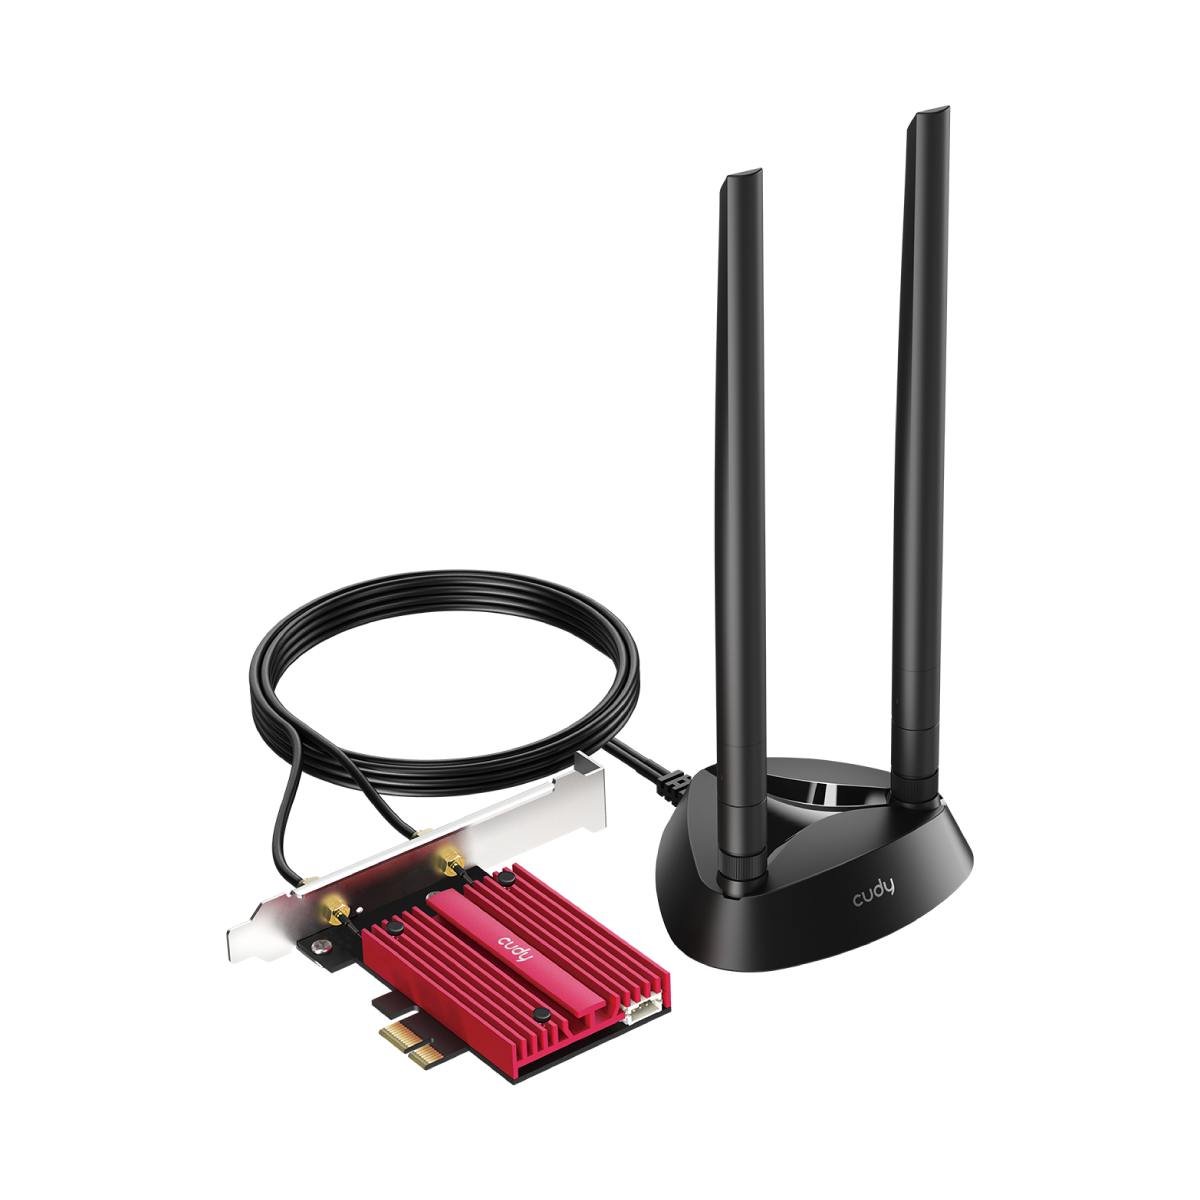 BE9300 Wi-Fi 7 Bluetooth 5.4 PCI-E Adapter, WE9300S 1.0